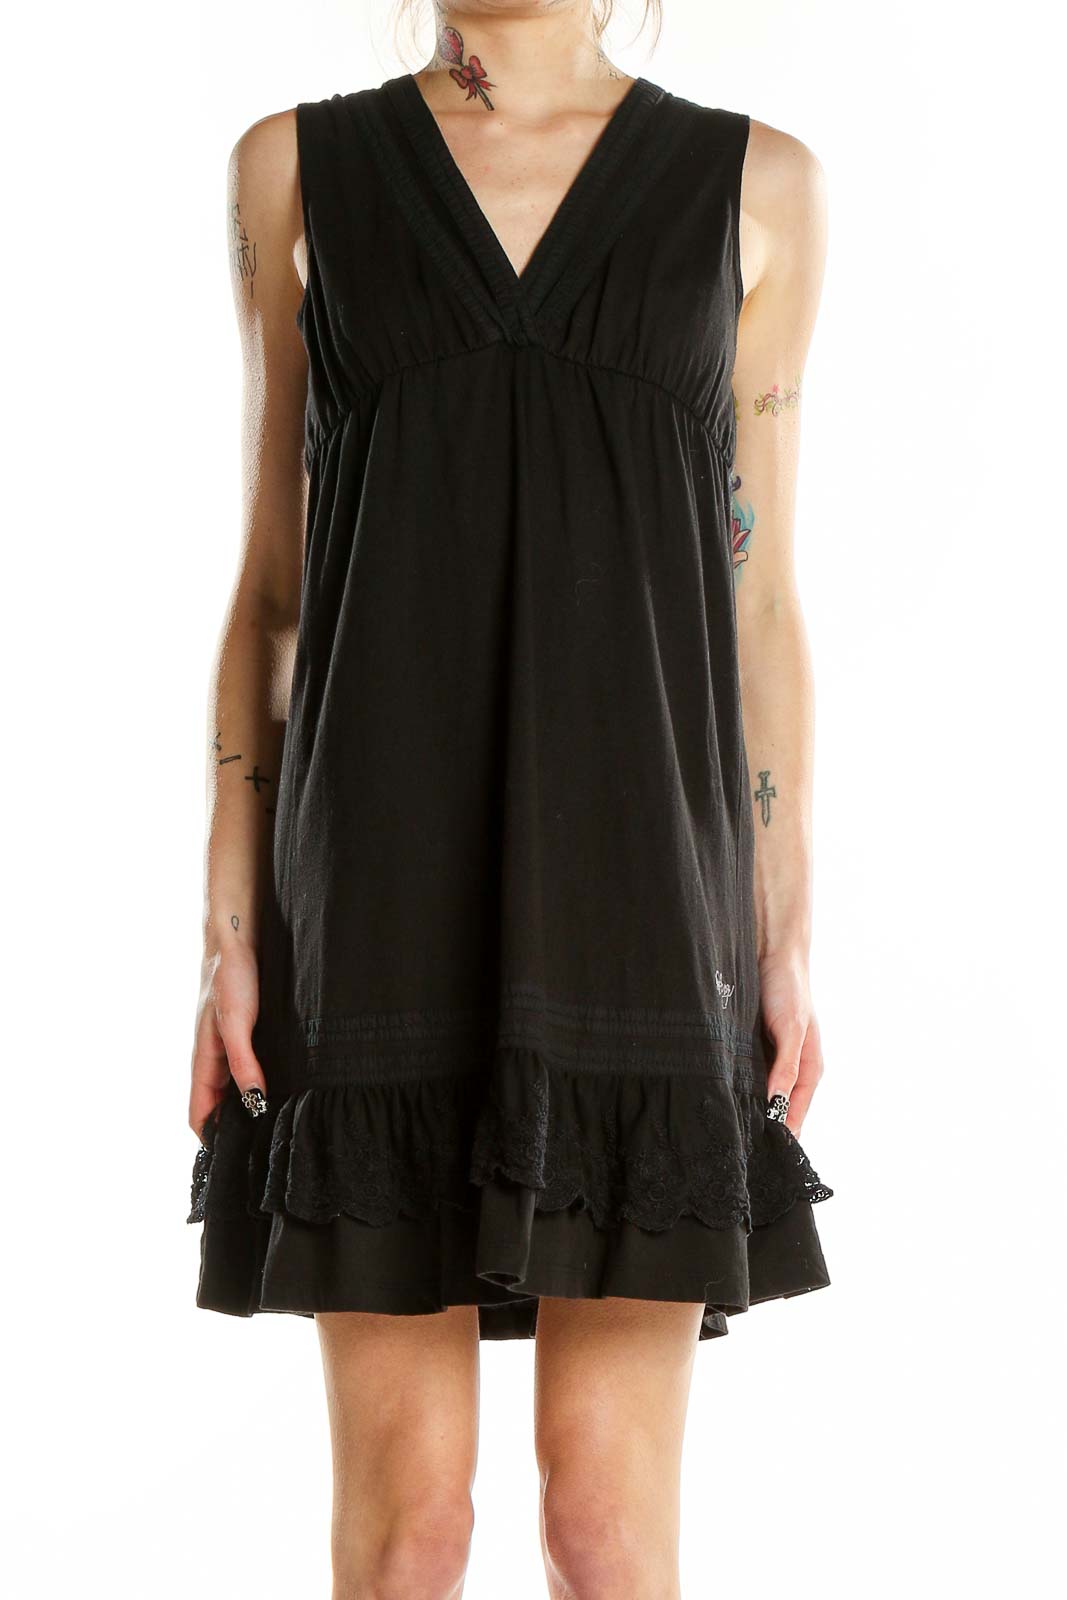 Black Sleeveless Lace Trim Dress Front